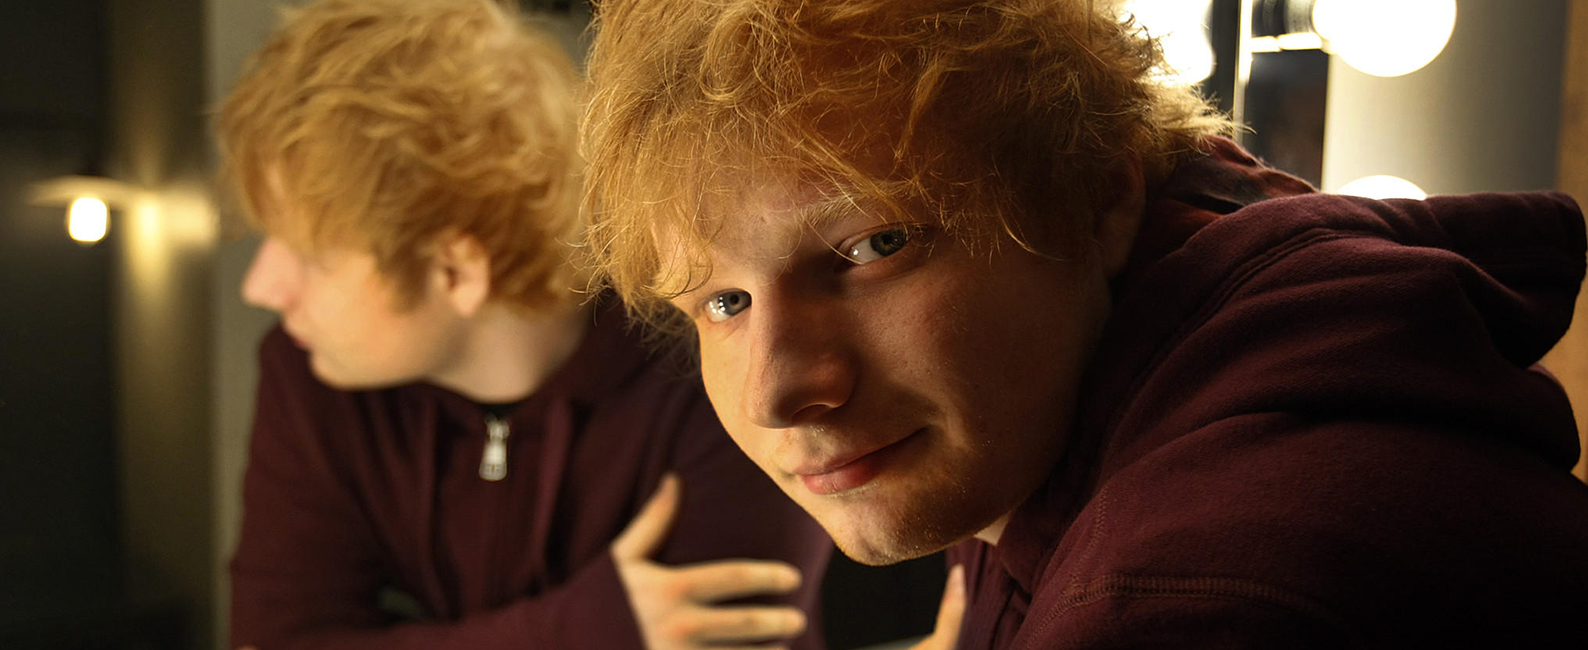 Ed Sheeran – Don’t